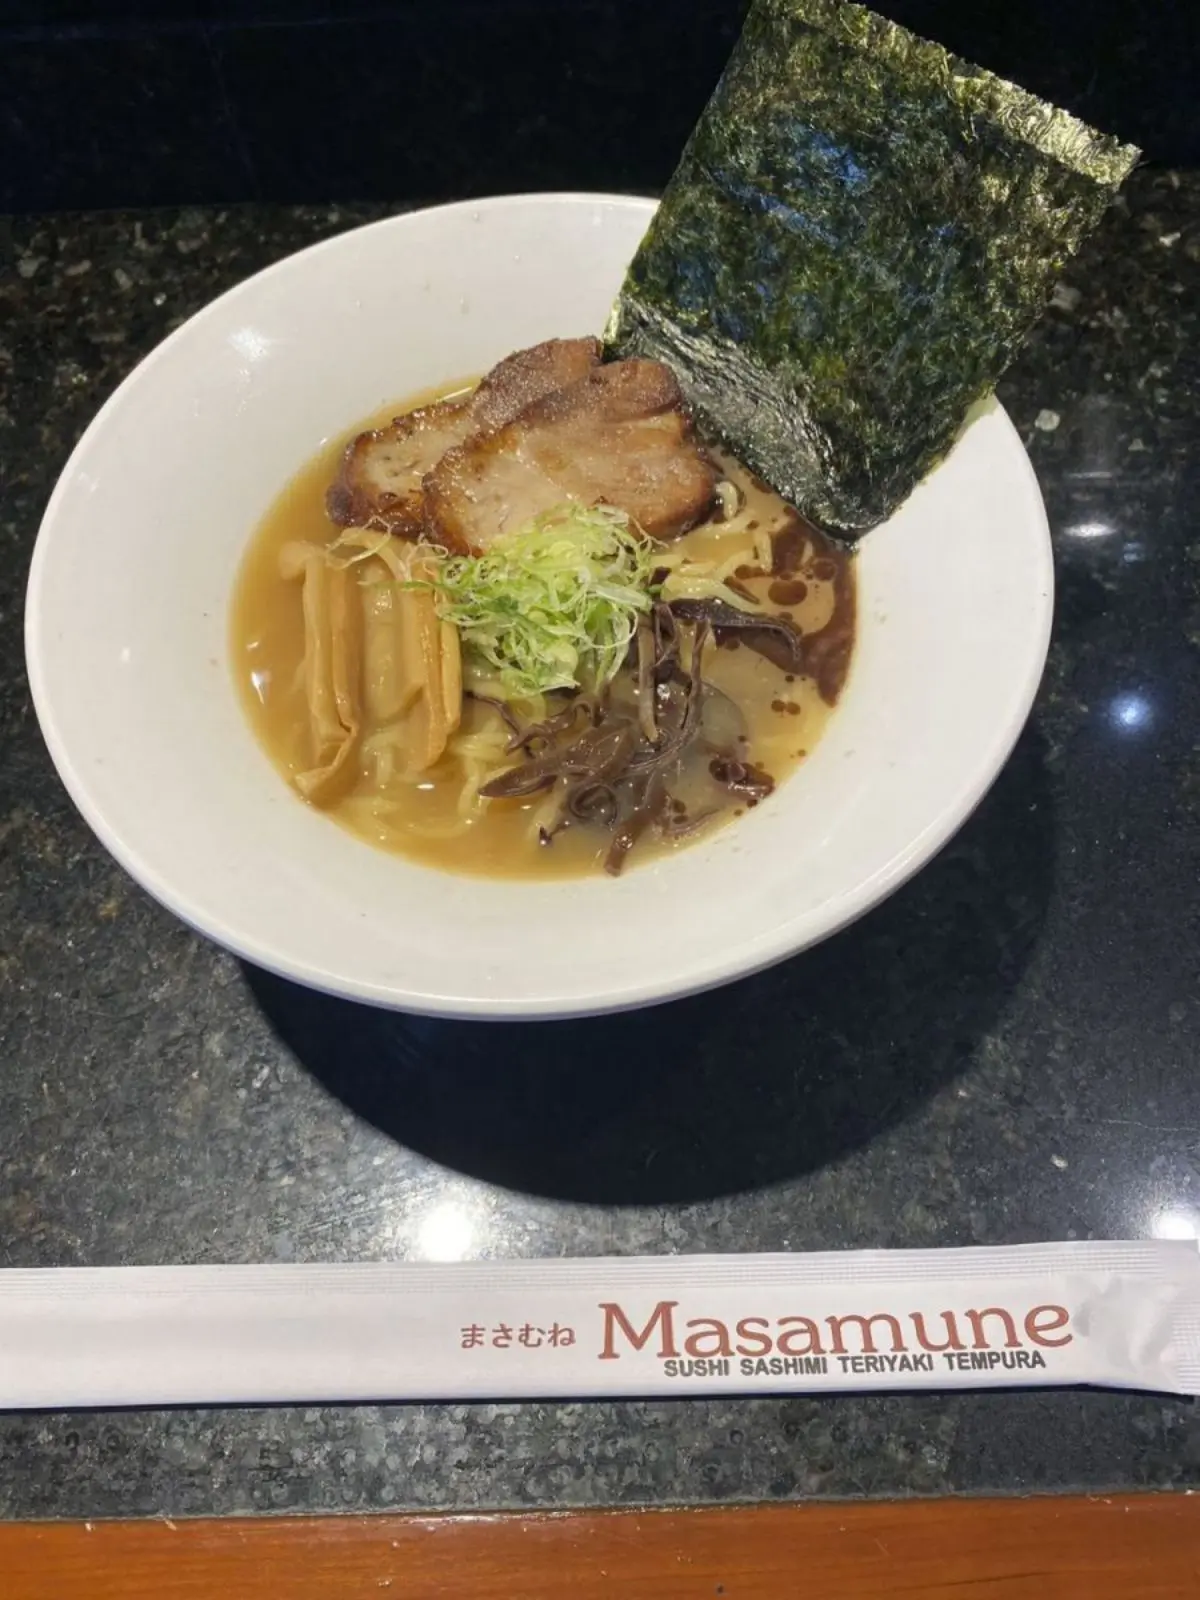 Masamune - Japanese Restaurant, Online Order, Deerfield Beach